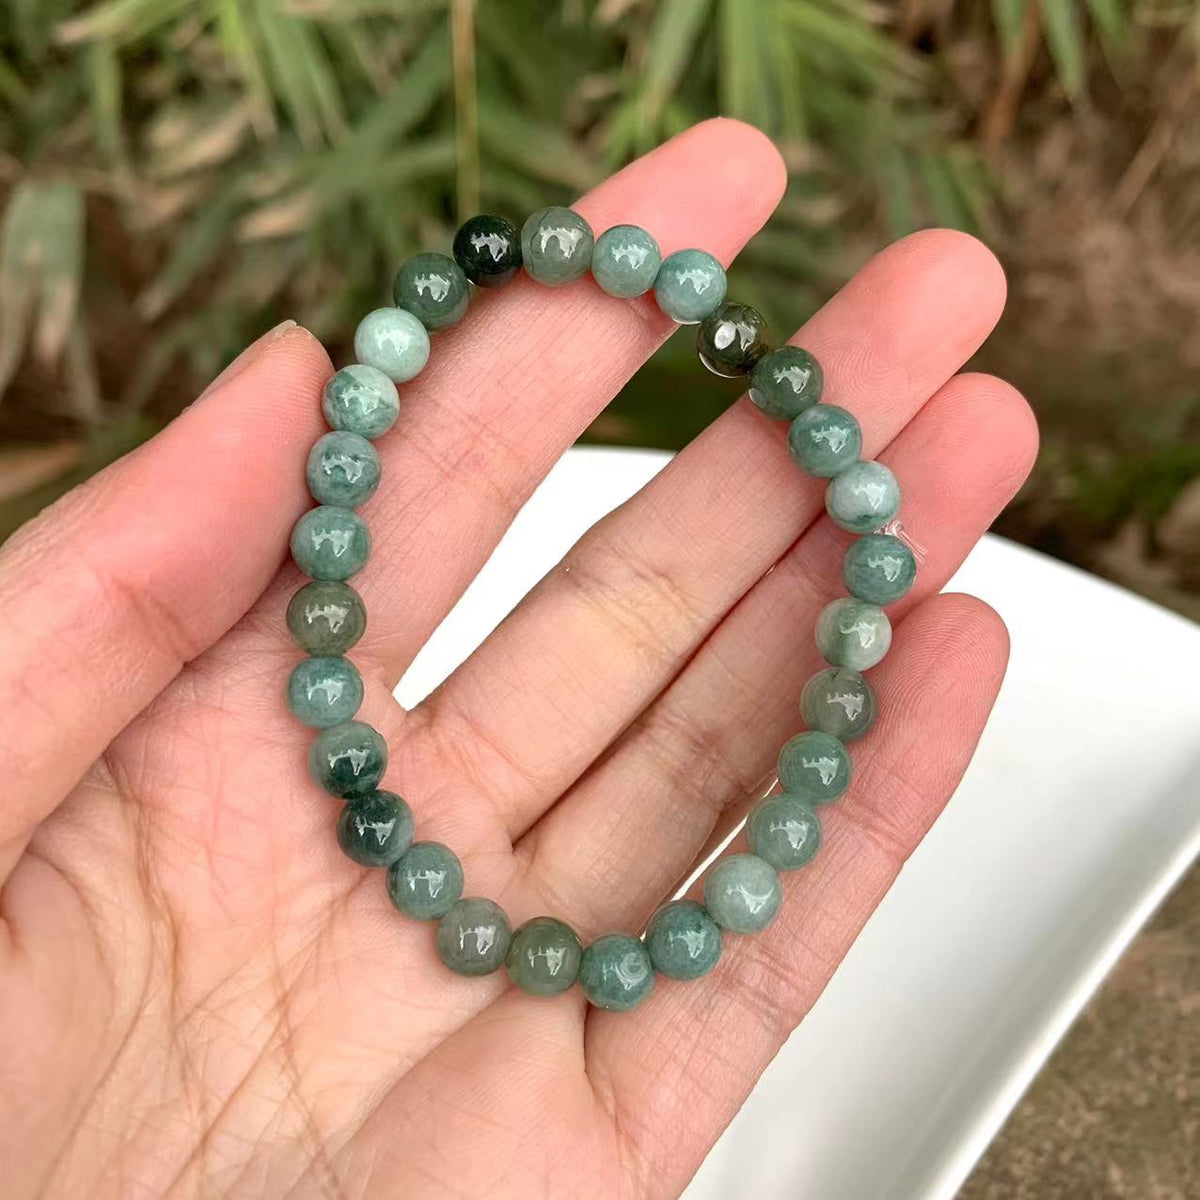  6mm 60pcs Natural Stone Burmese Jade Beads for Jewelry Making  DIY Bracelet Energy Crystal Healing Power